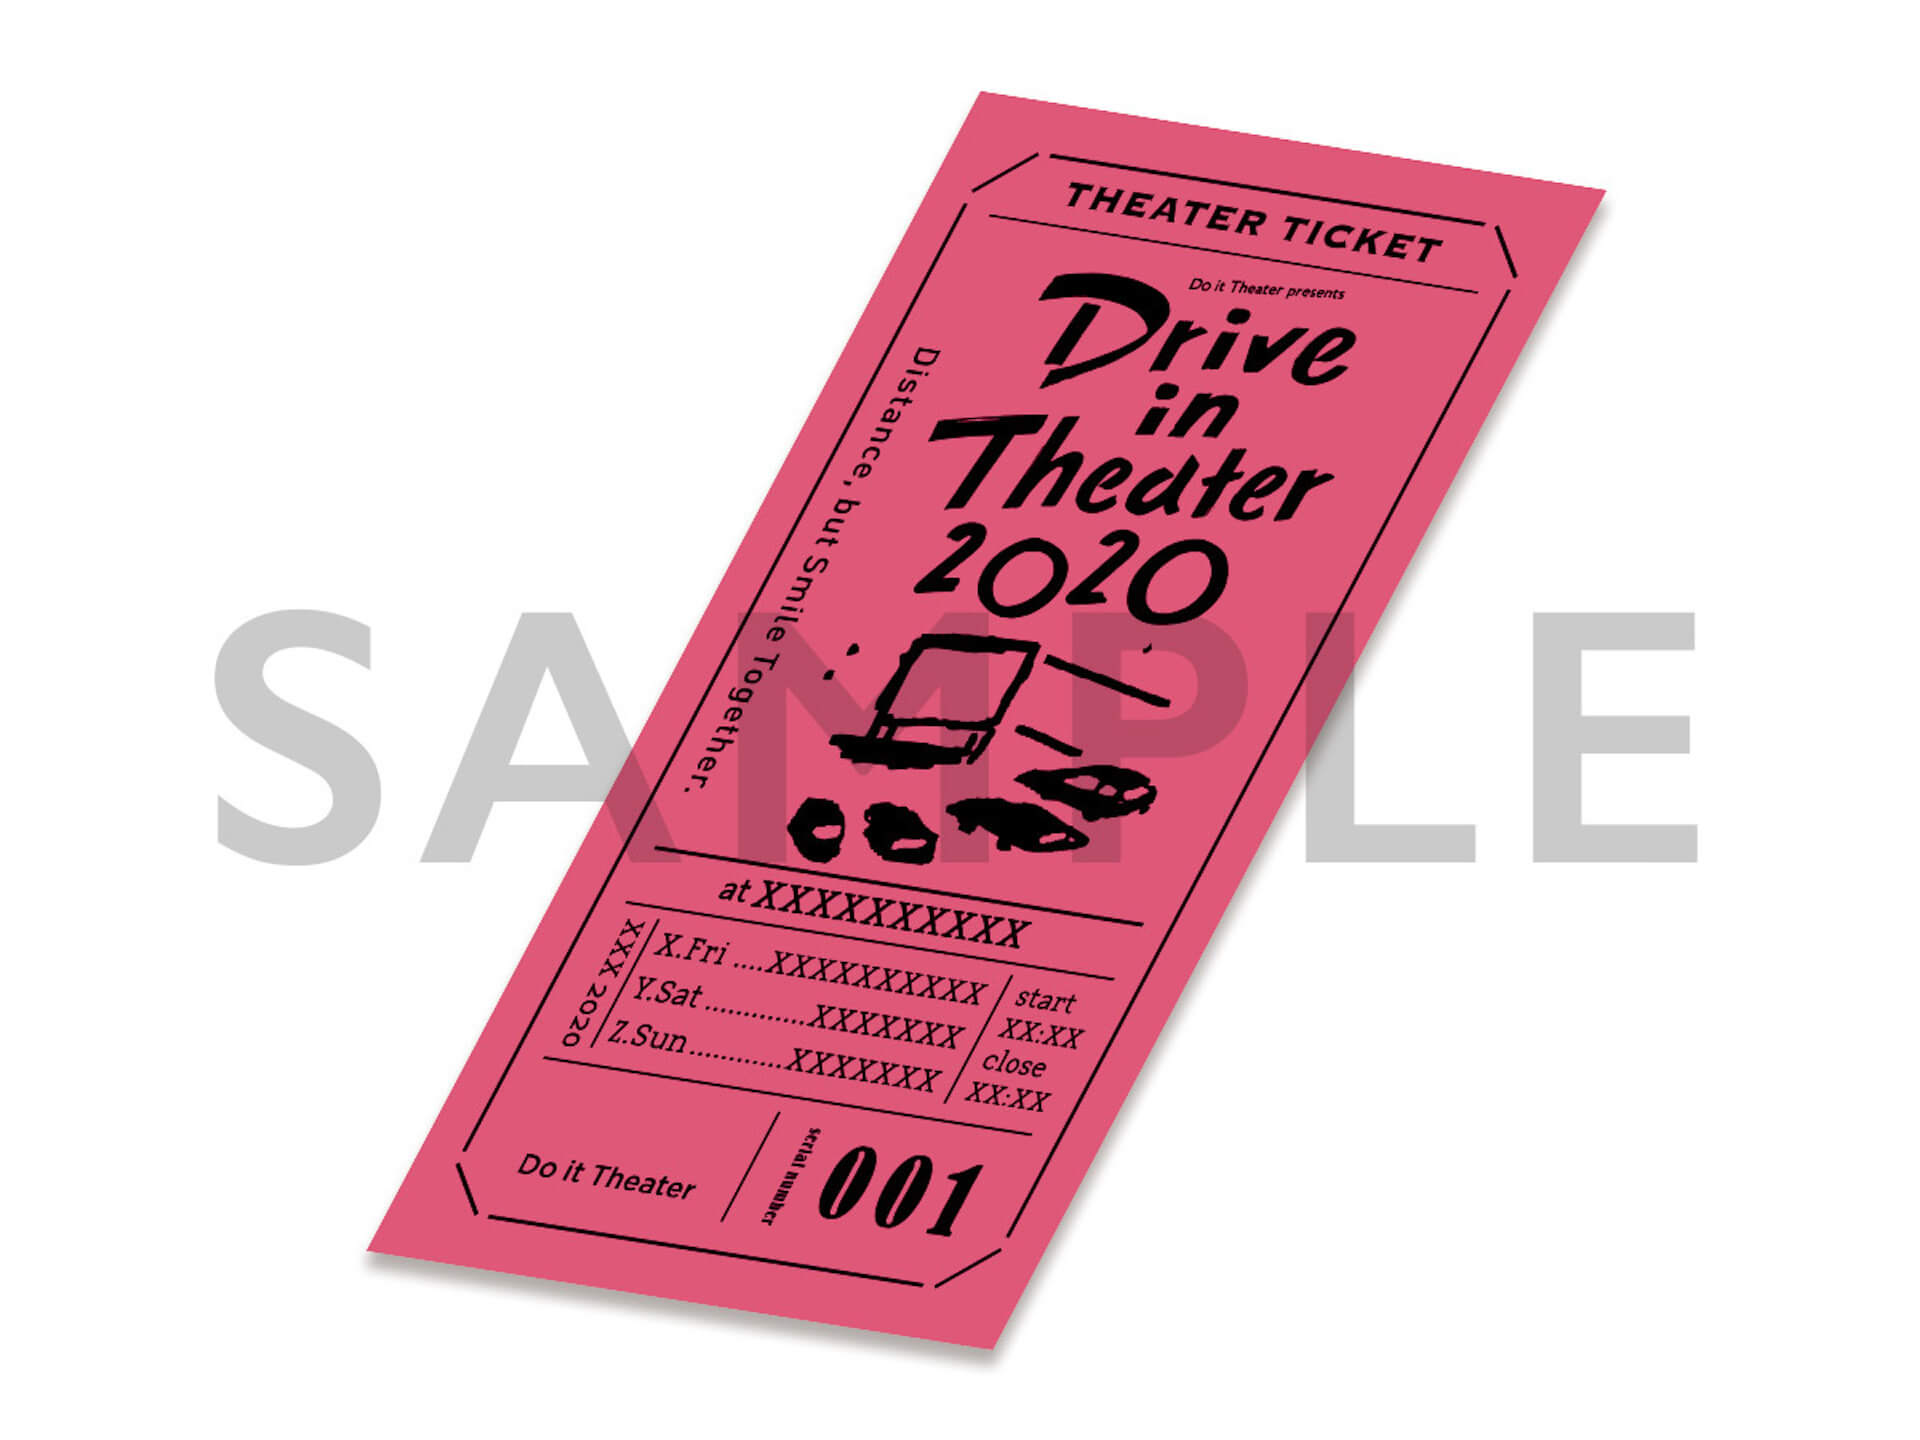 Do it Theaterがドライブシアター実現と映画支援を目指す「Drive in Theater 2020」をMOTION GALLERYにて公開 film200413_driveintheater_05